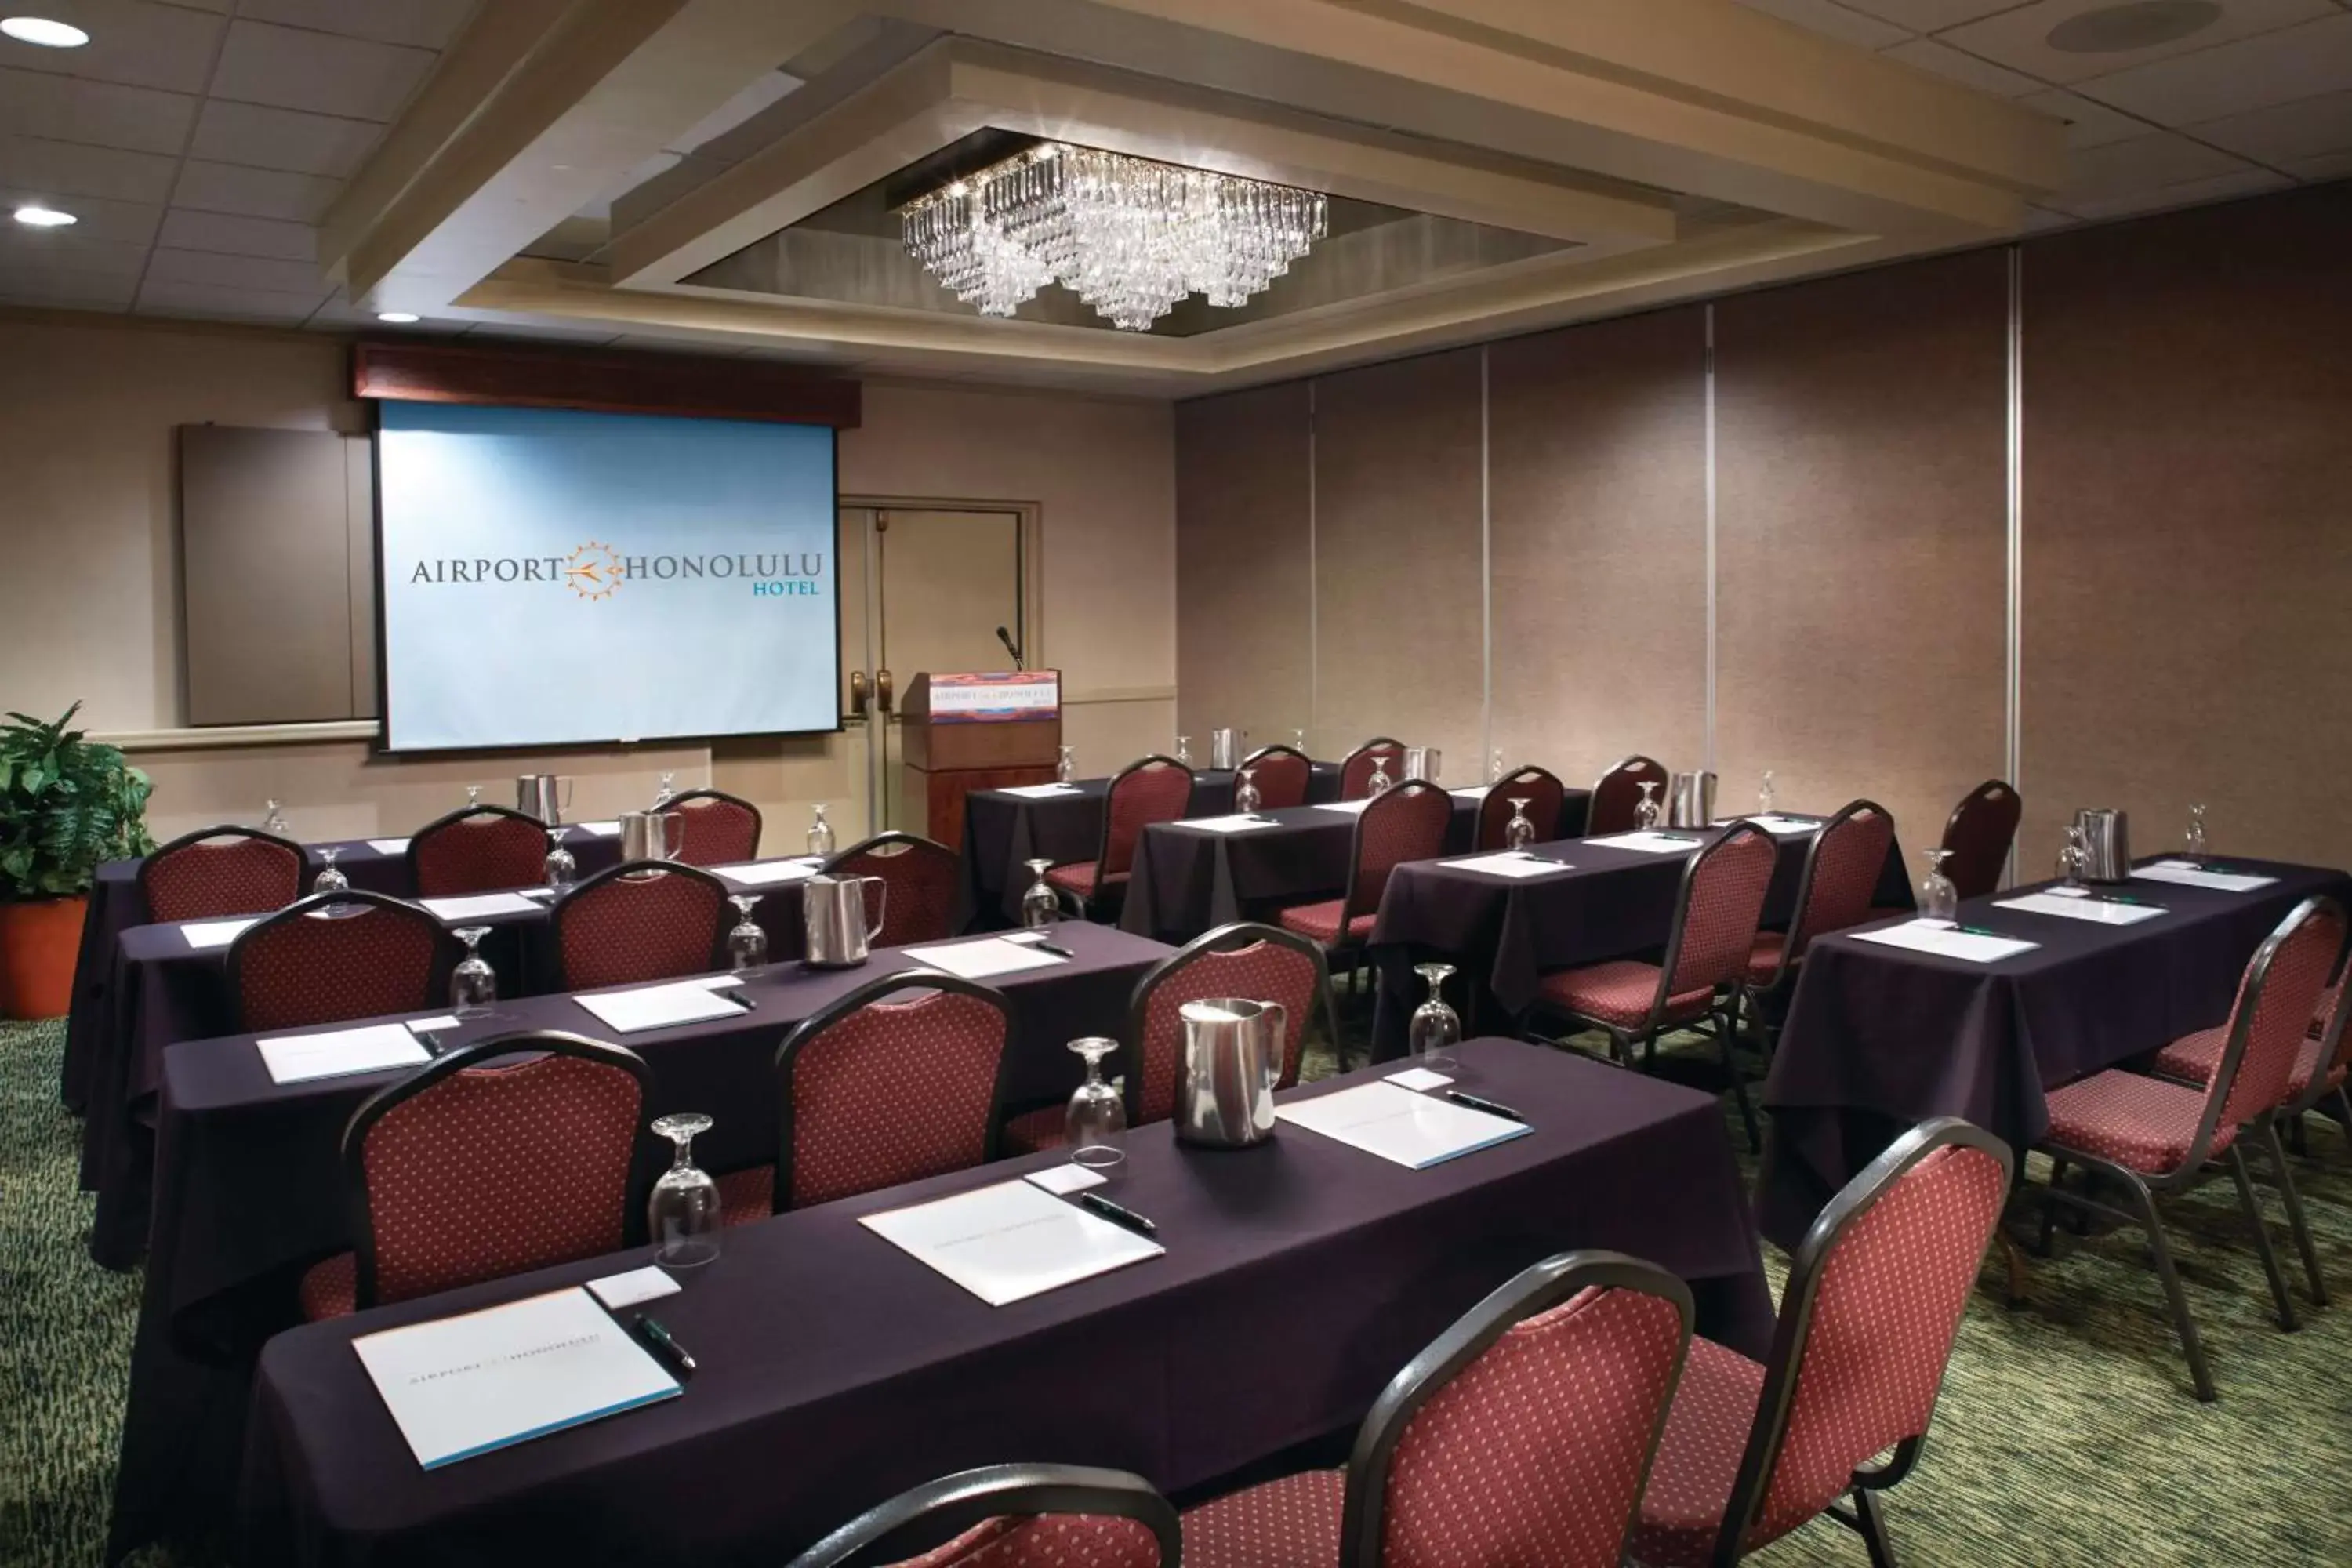 Meeting/conference room in Airport Honolulu Hotel